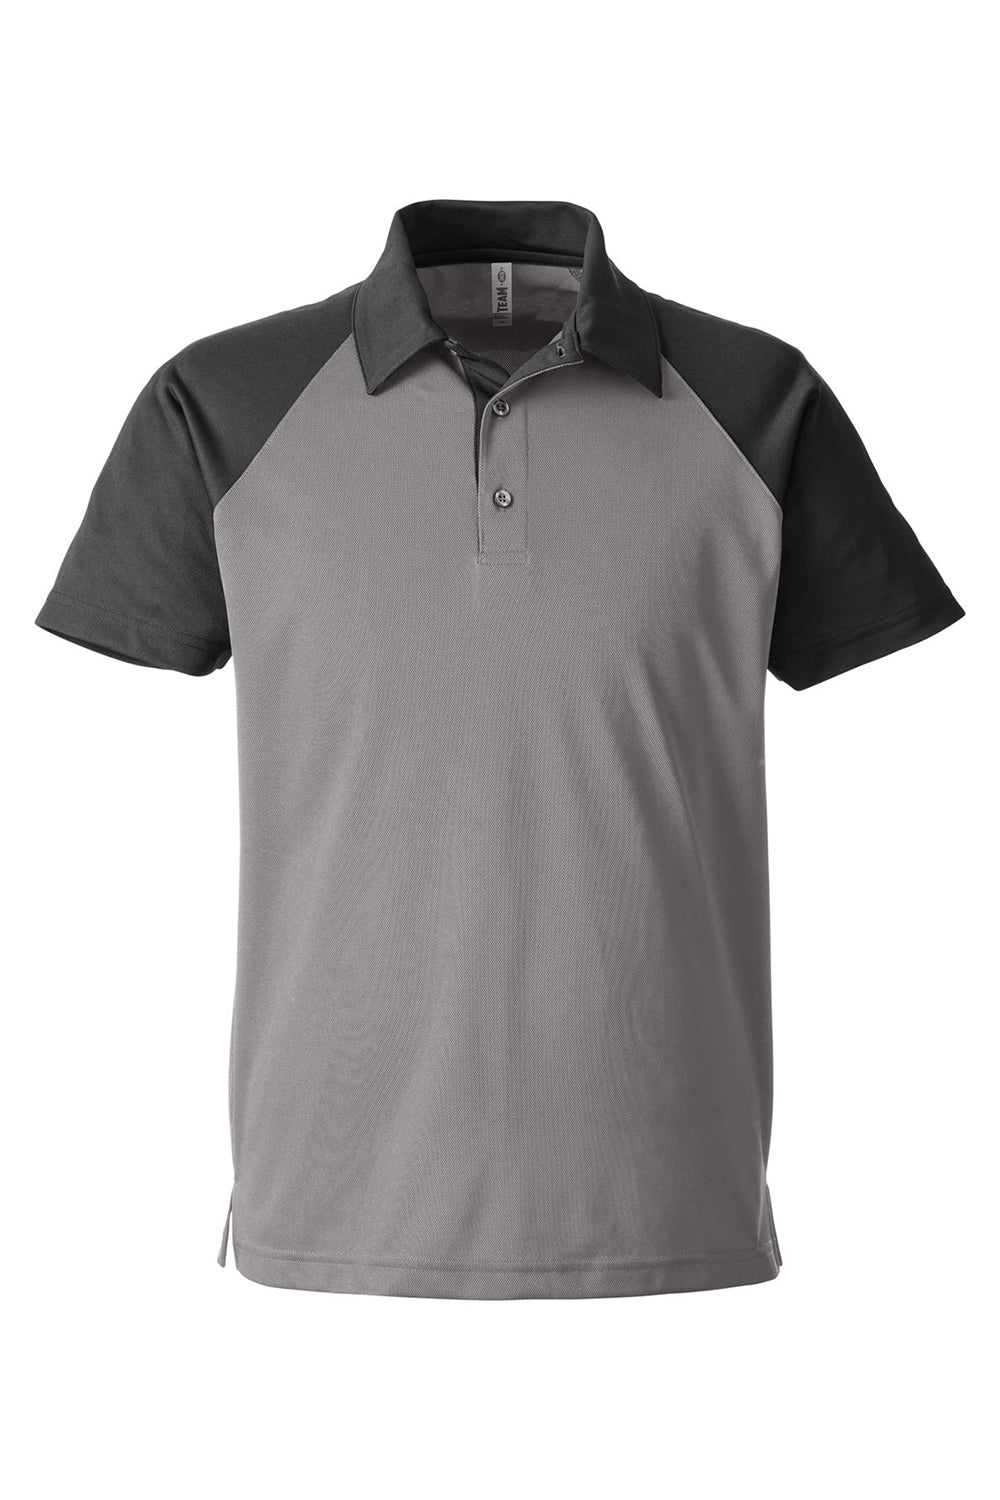 Team 365 TT21C Mens Command Colorblock Moisture Wicking Short Sleeve Polo Shirt Graphite Grey/Black Flat Front